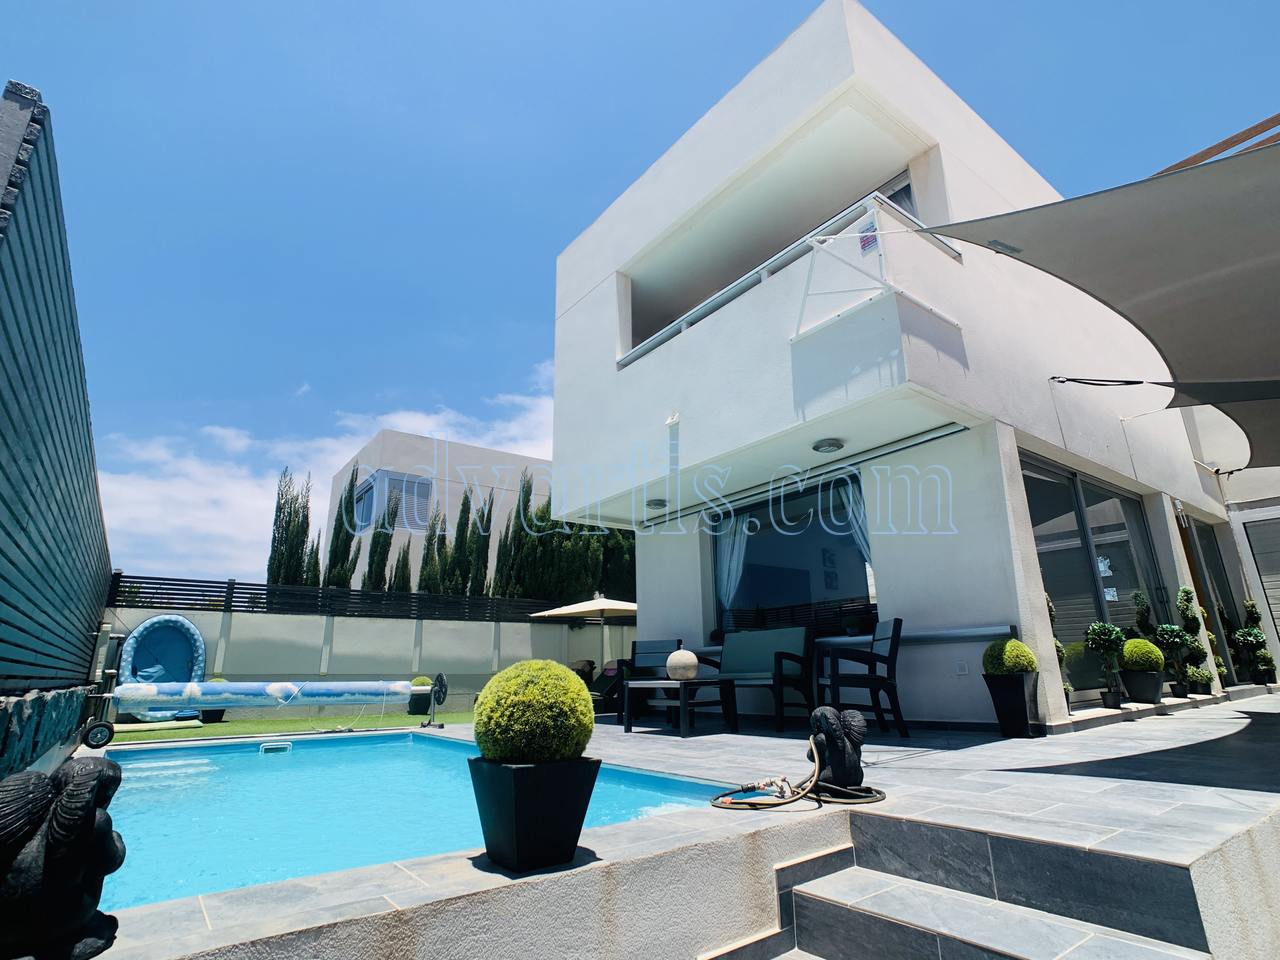 3 bedroom villa for sale in Chayofa, Tenerife €540.000